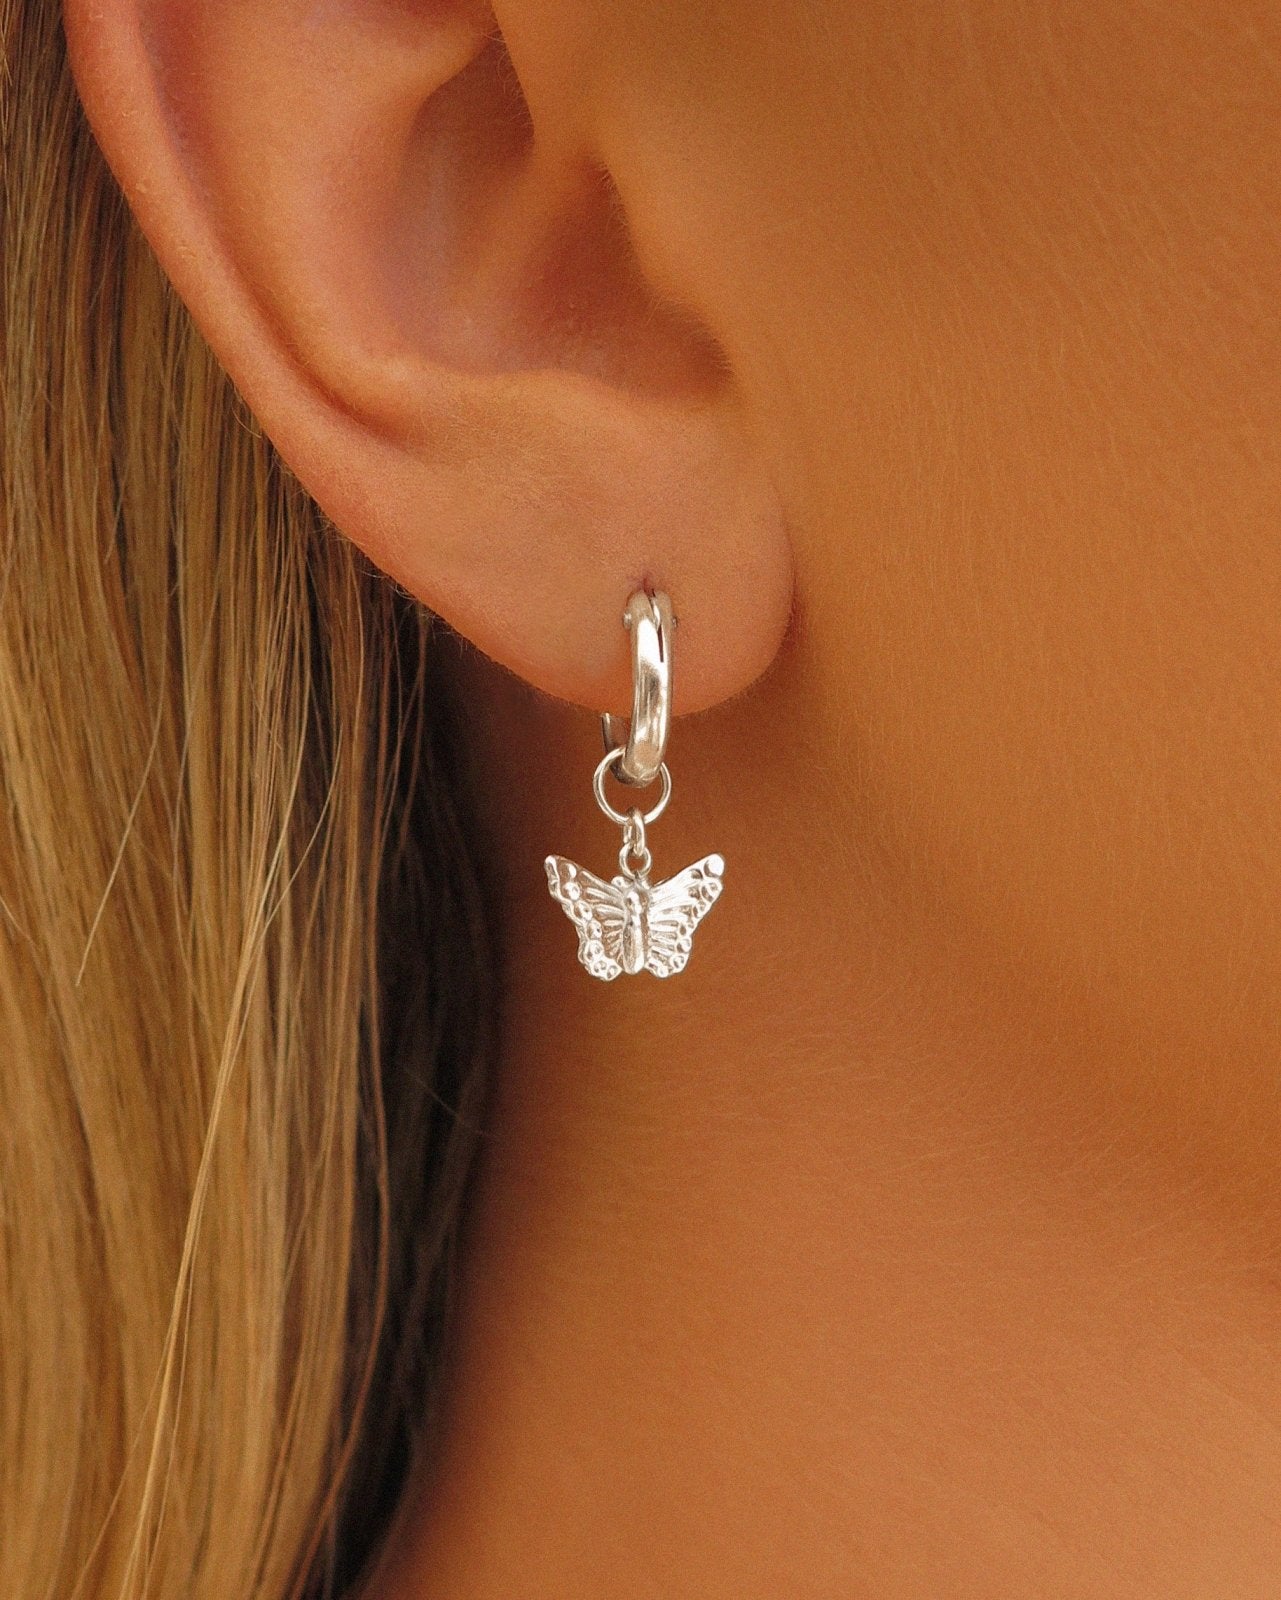 BUTTERFLY THICK HOOP EARRINGS - Sterling Silver - The Littl - 12mm - Sterling Silver Earrings